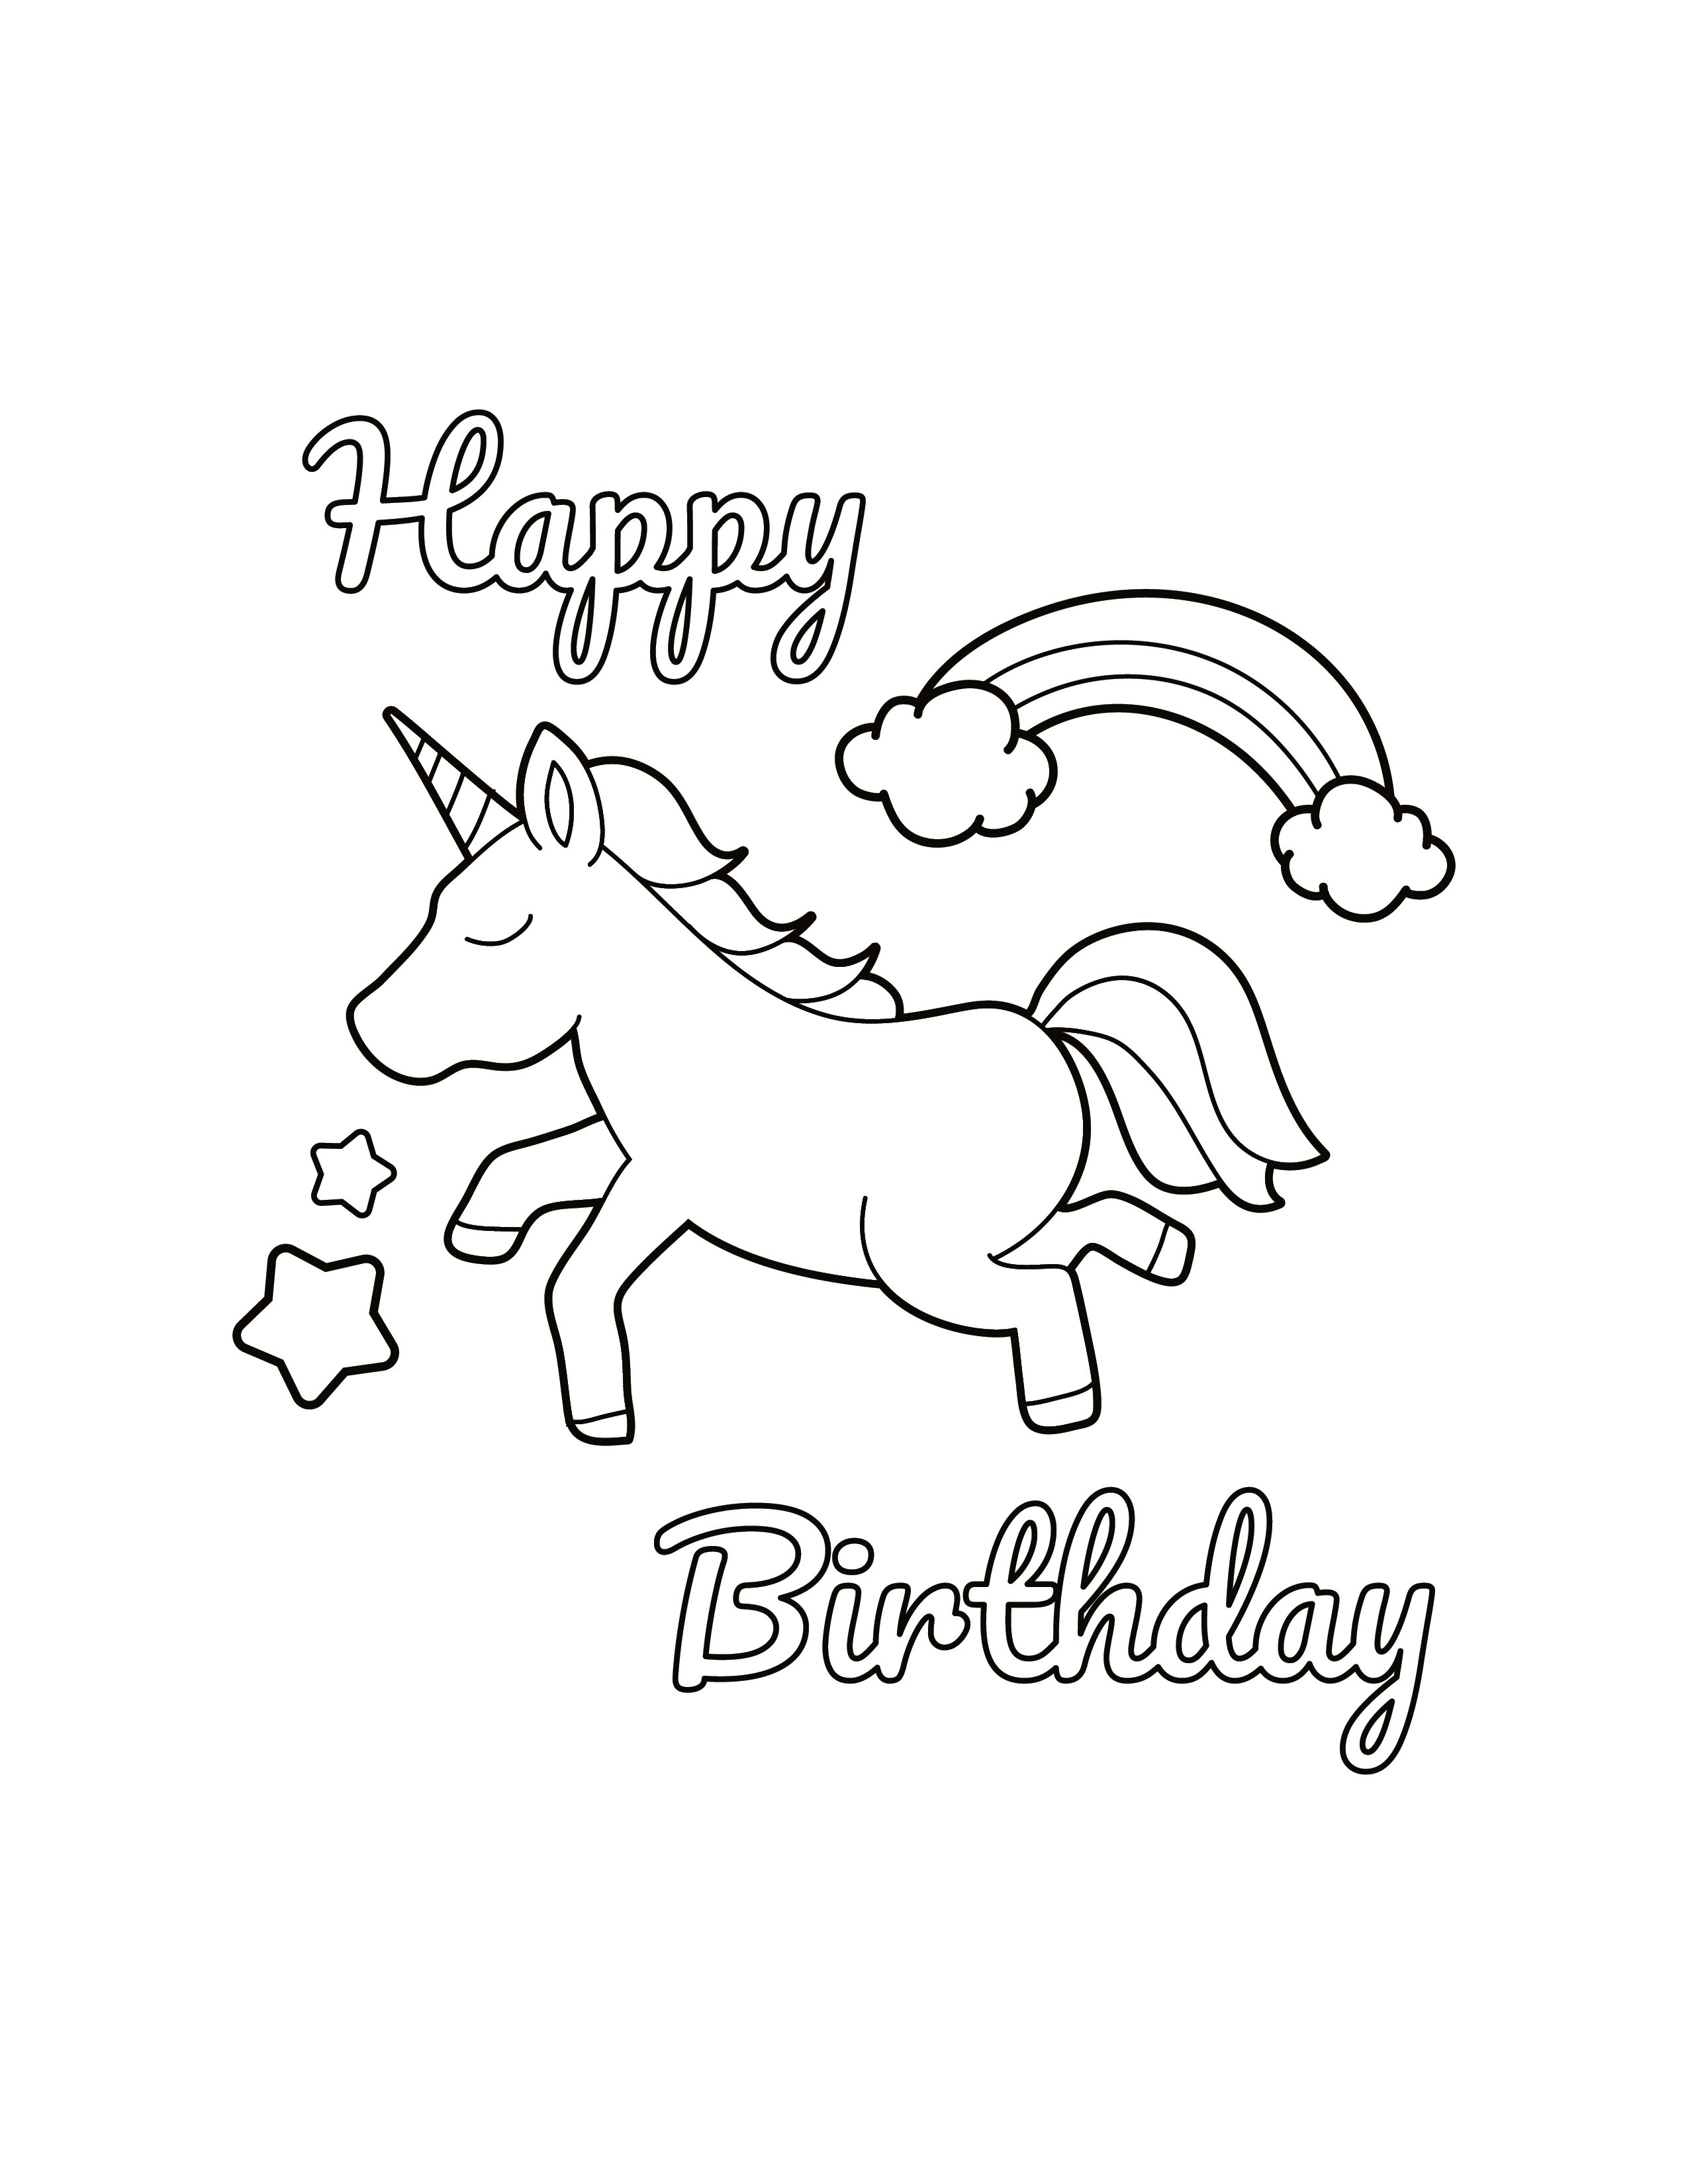 Free Happy Birthday Unicorn Coloring Page   EPS, Illustrator, JPG ...